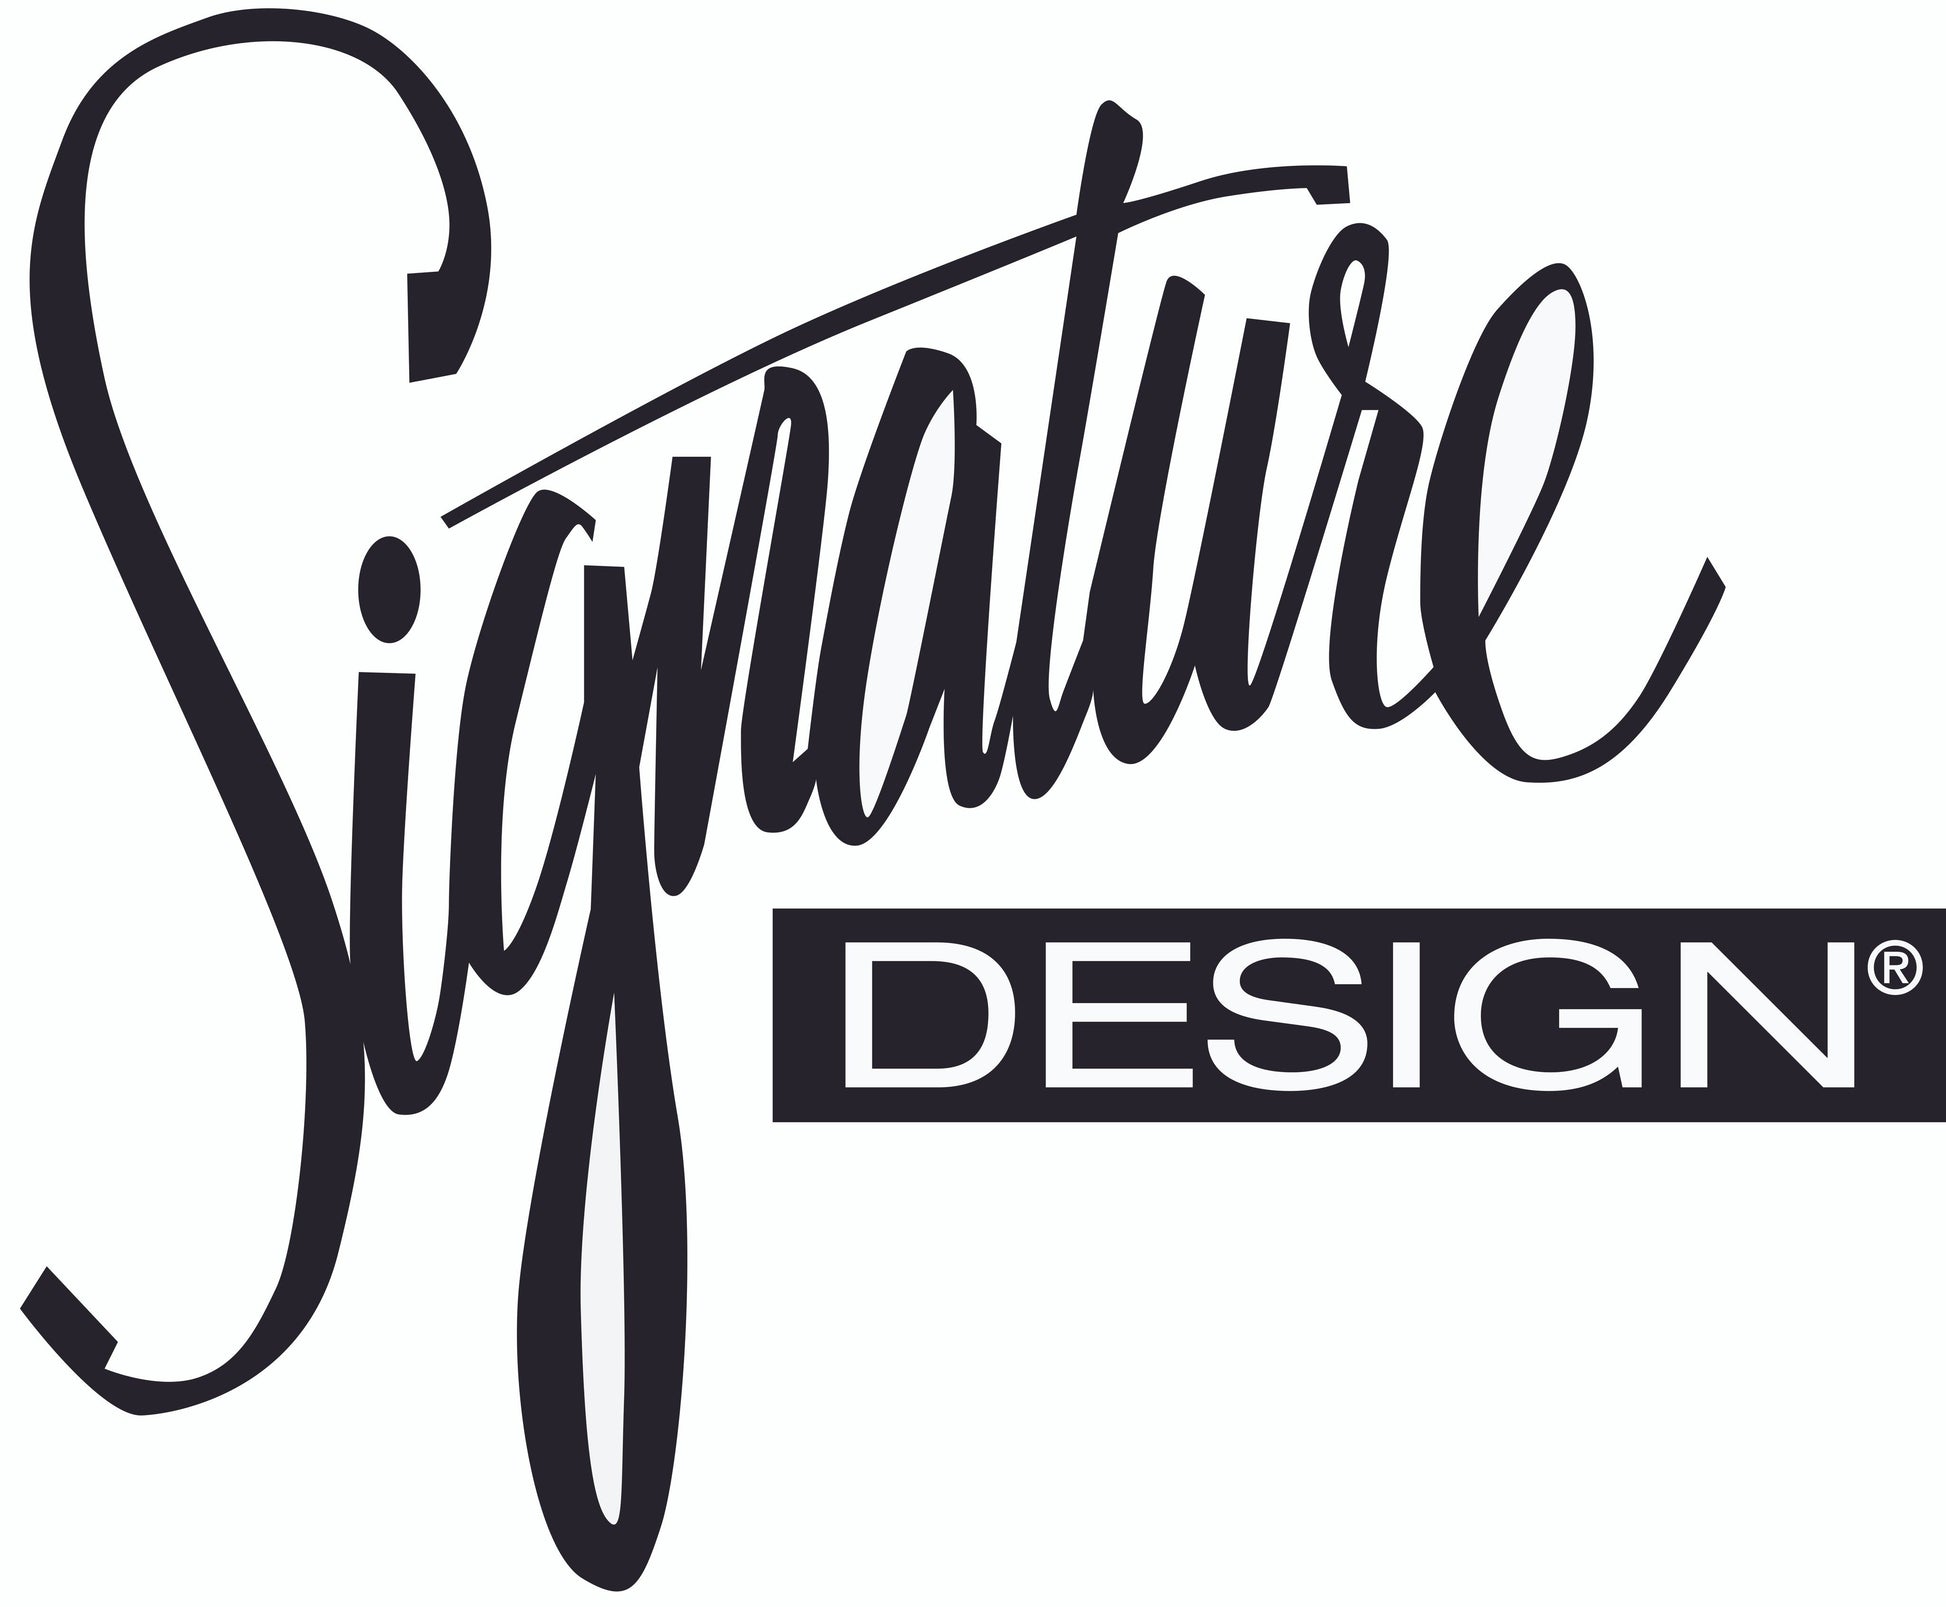 Foyland Rectangular Dining Room Table Signature Design by Ashley®